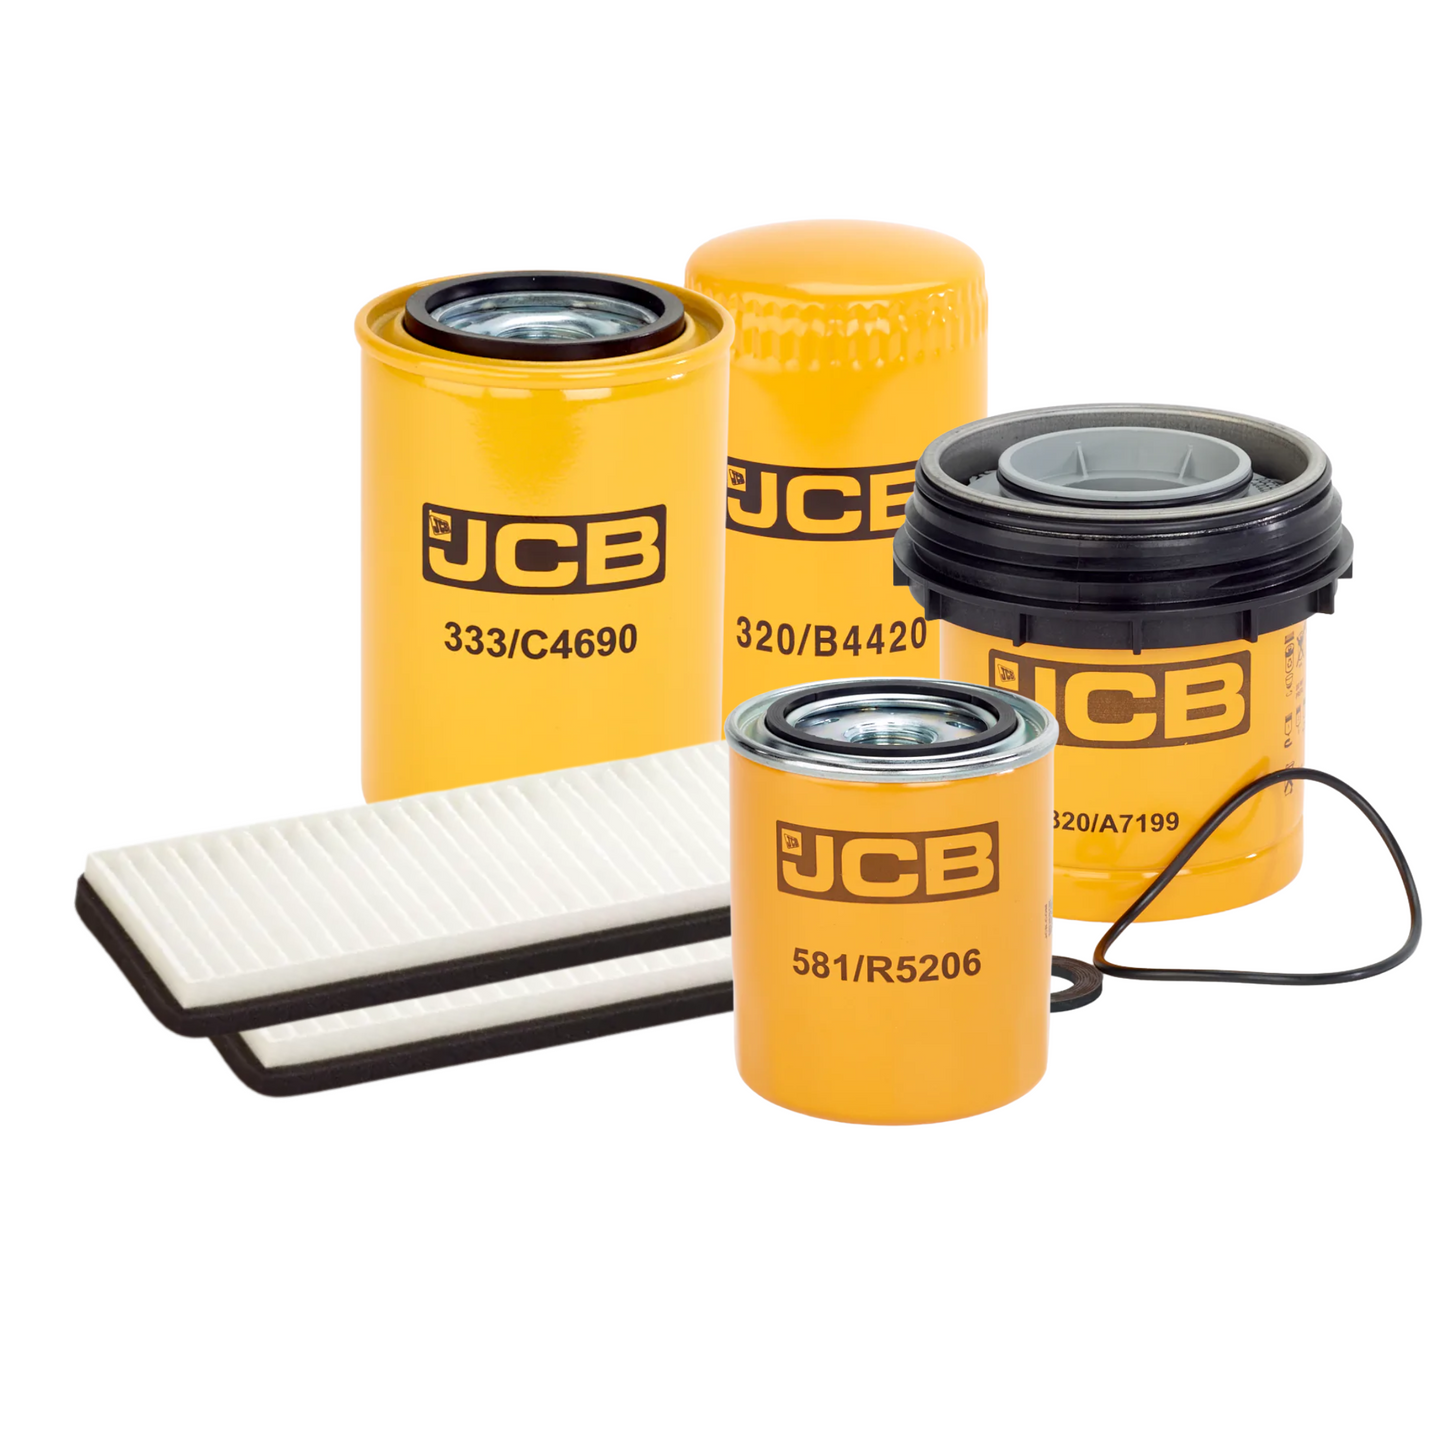 JCB 535-95 4500 Hour Filter Service Kit